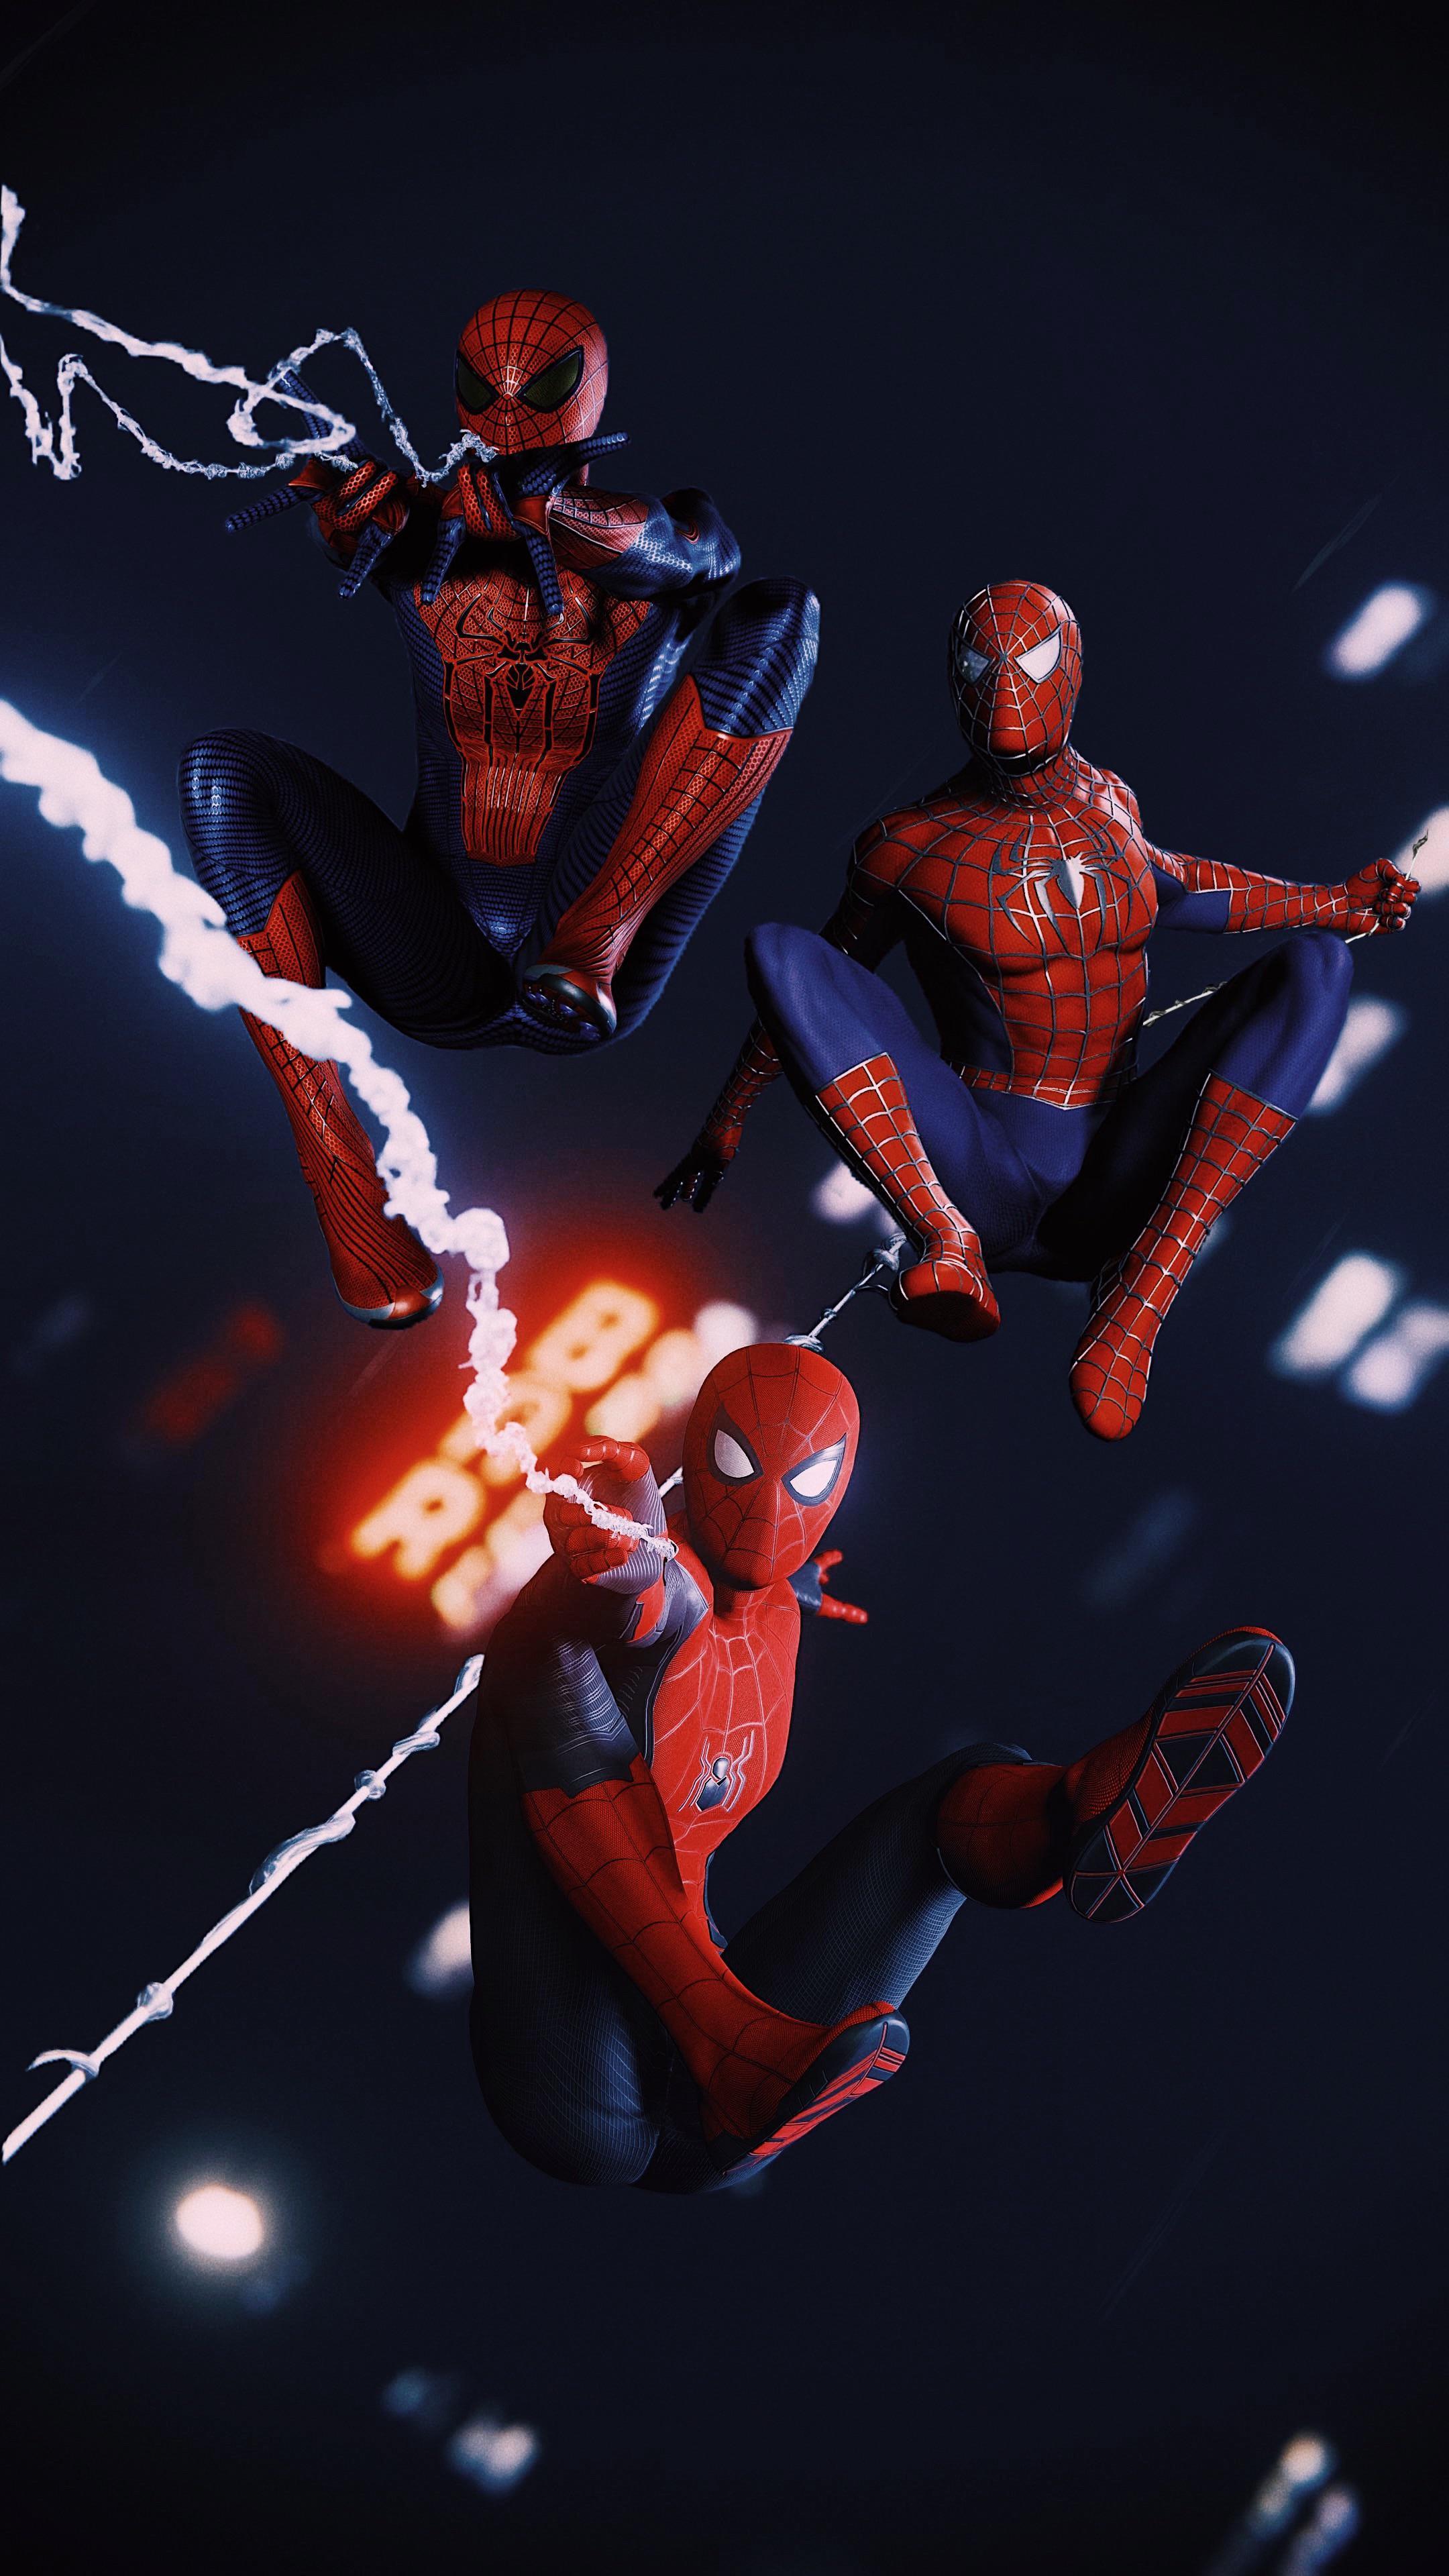 The Amazing Spiderman Wallpaper by kenmejia on DeviantArt